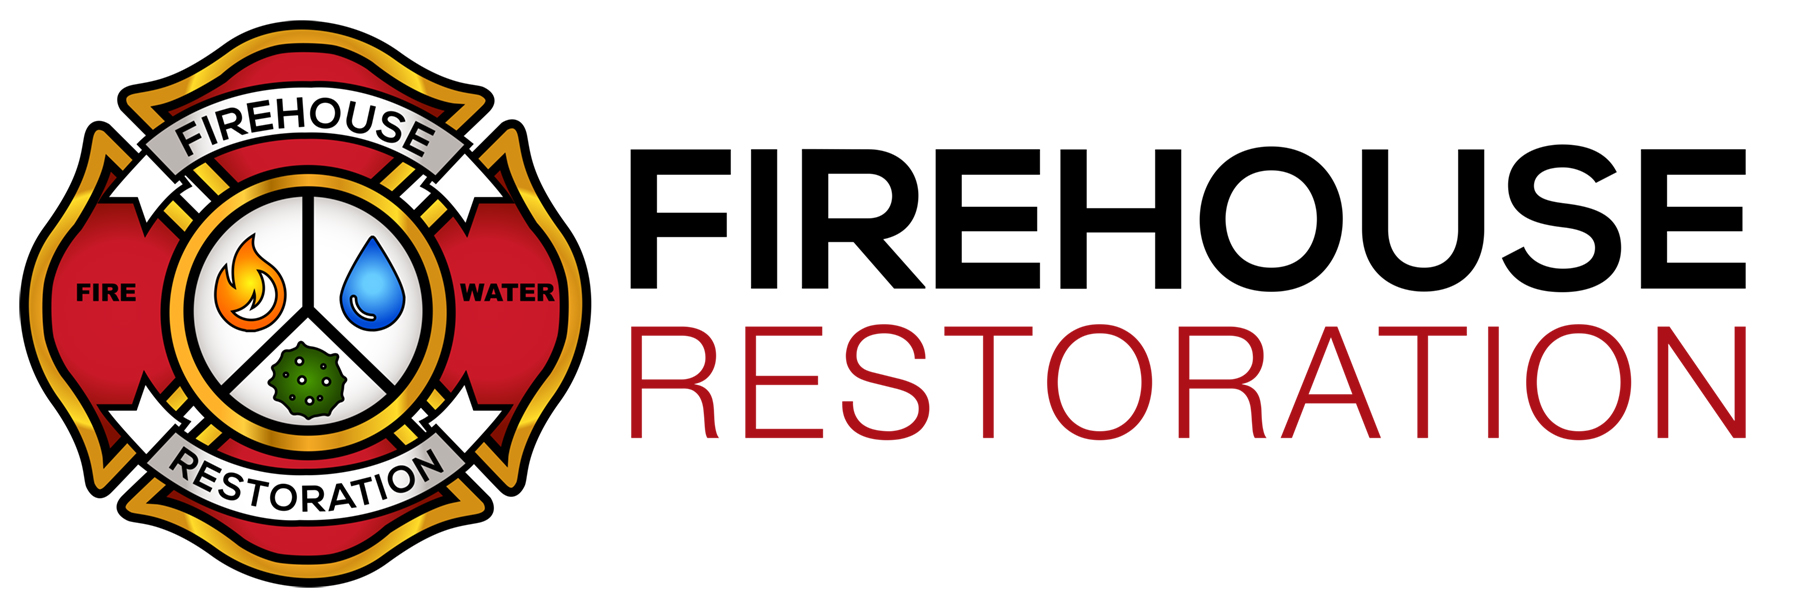 Firehouse Restoration, Inc. Logo